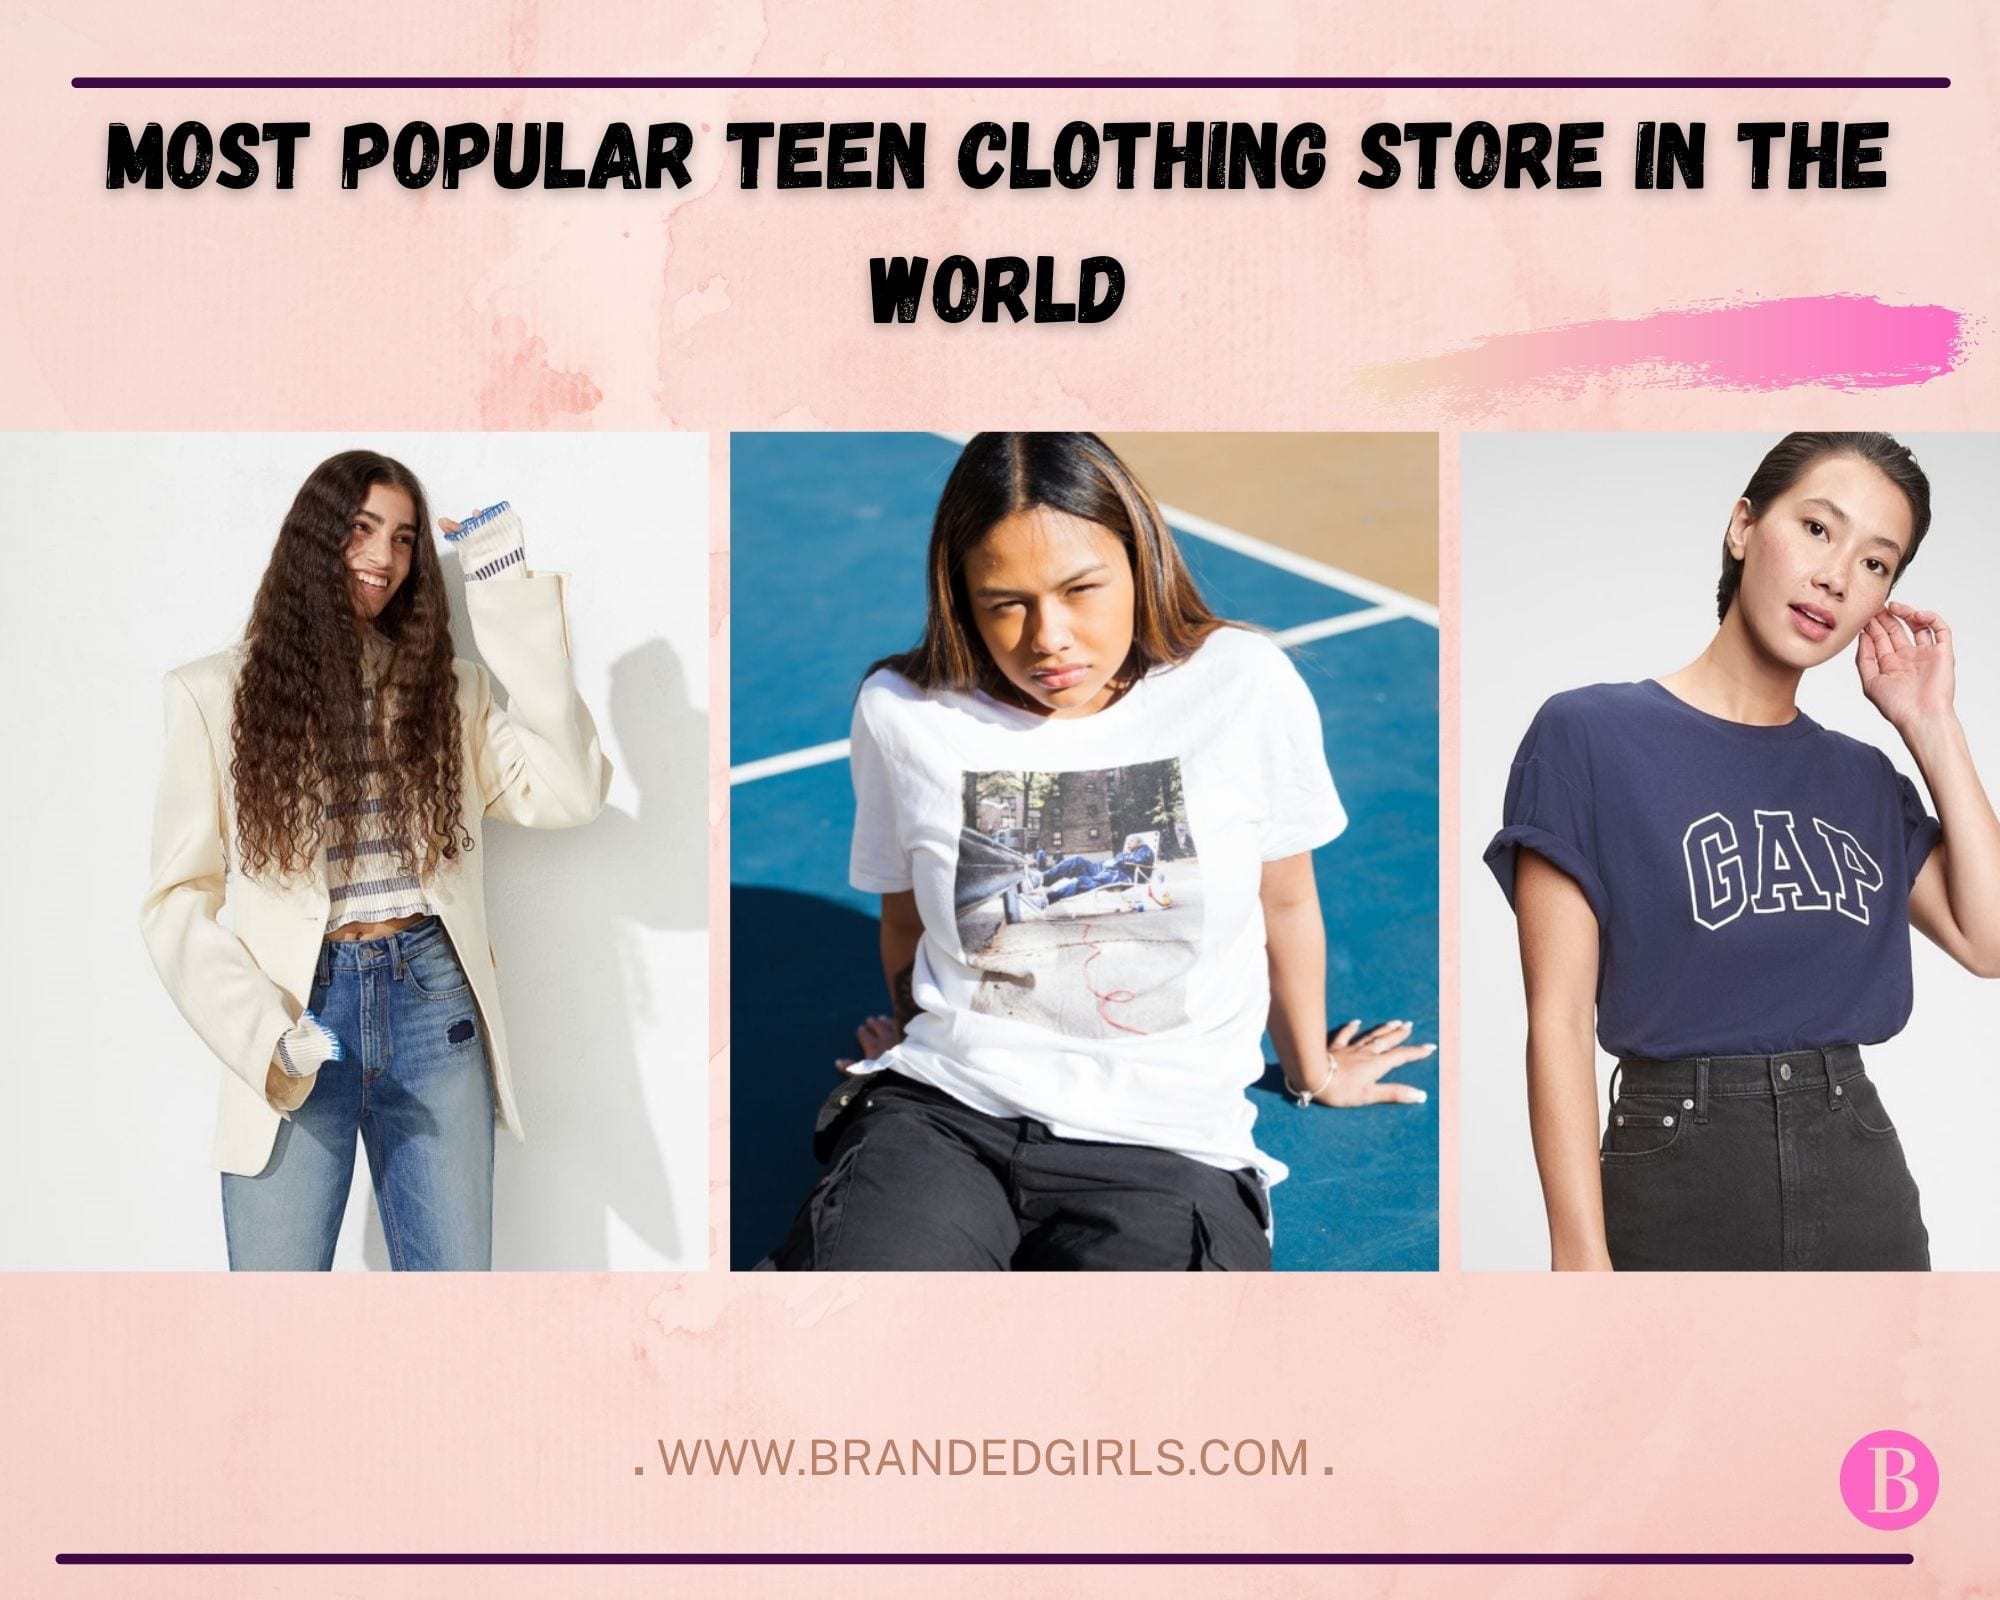 Name Brand Teen Clothing